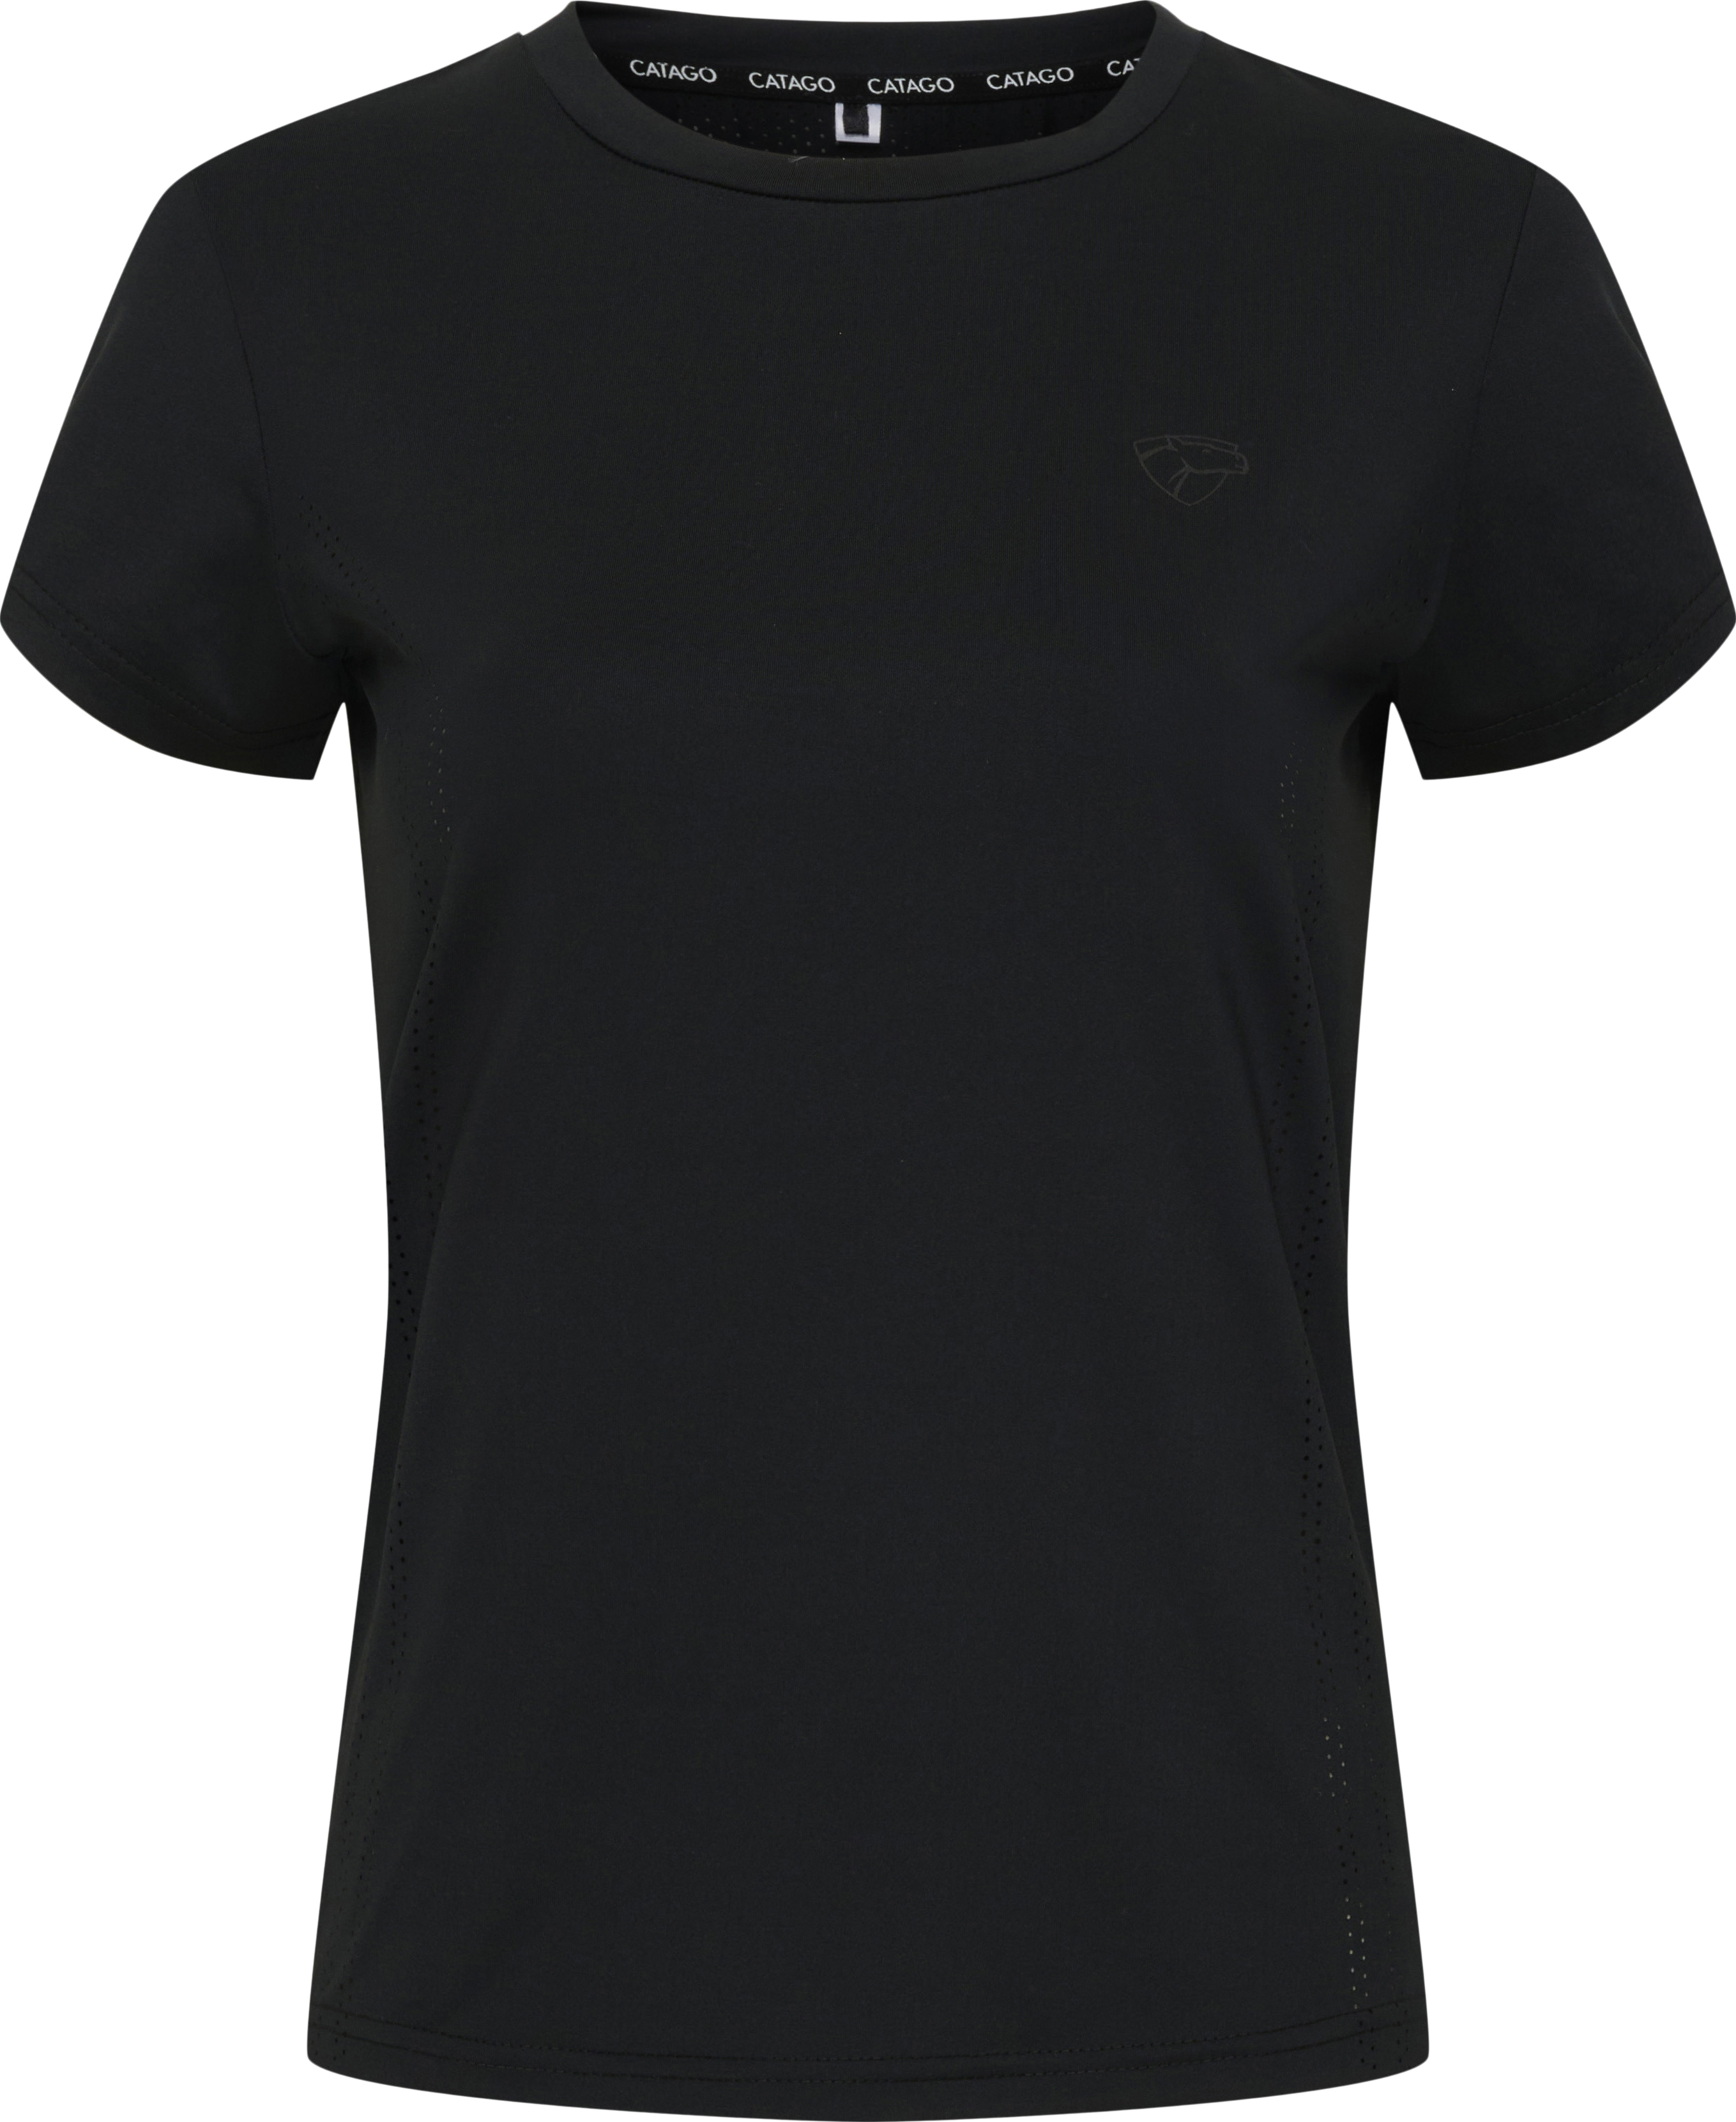 CATAGO Ruby logo T-Shirt - Black (S), Catago